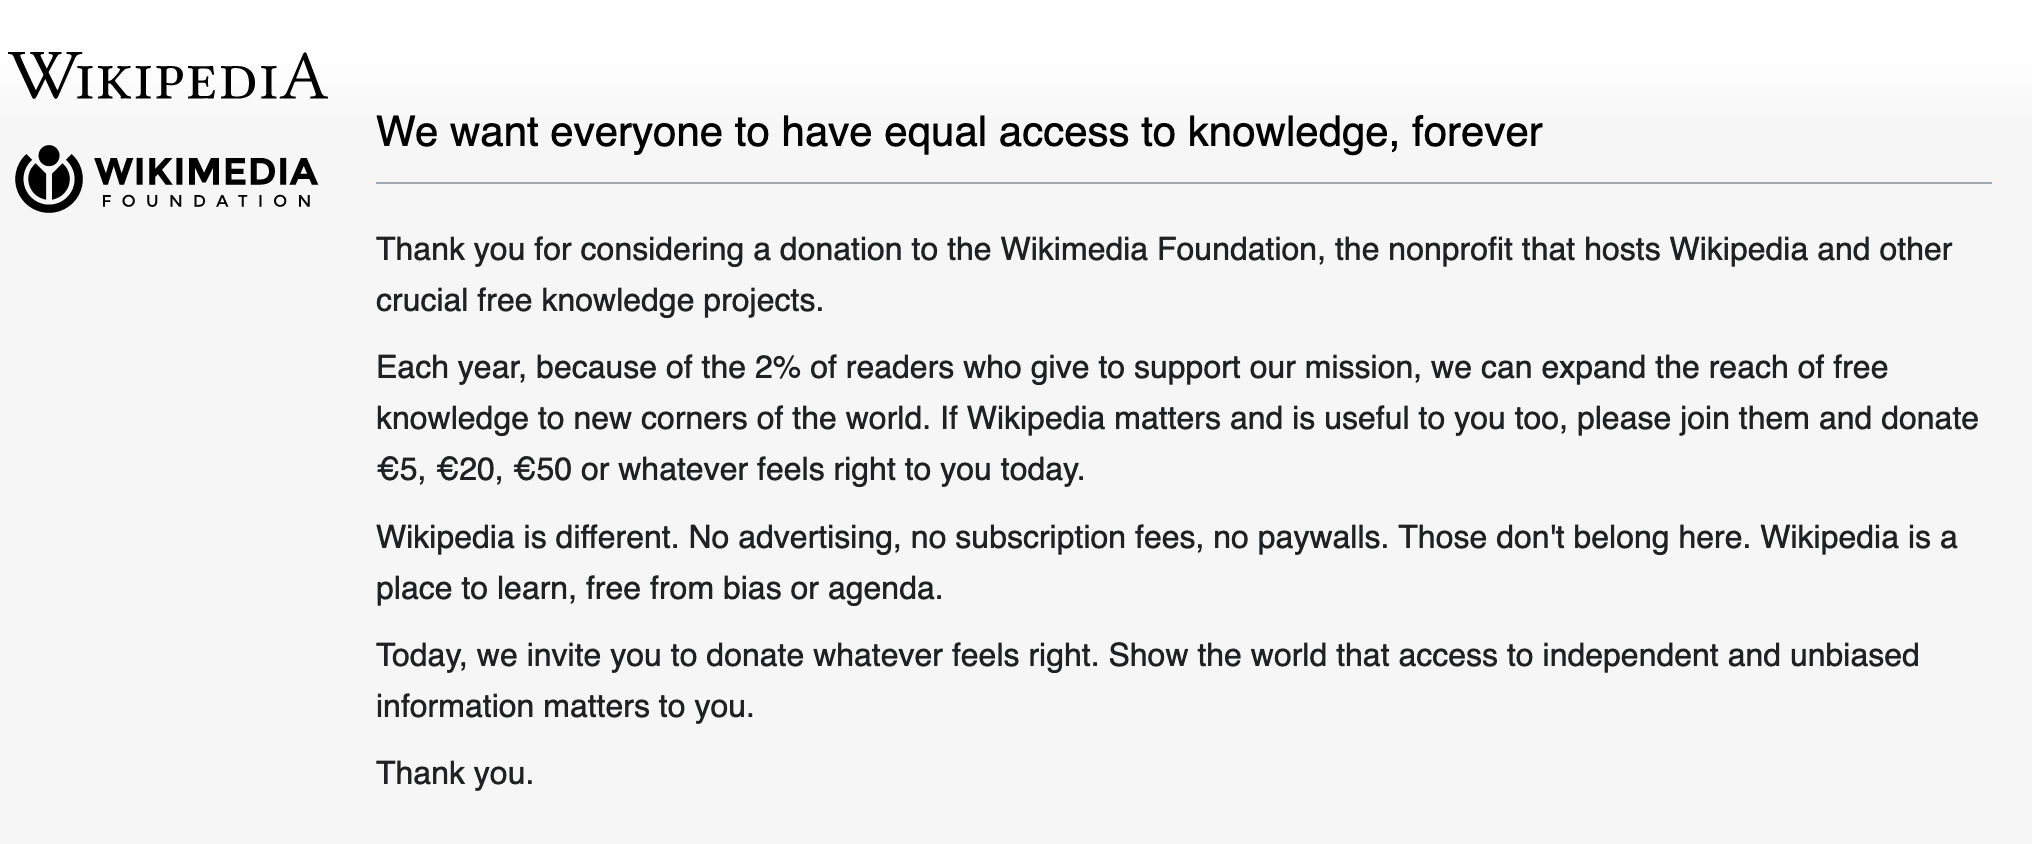 monetag - wikipedia - donation